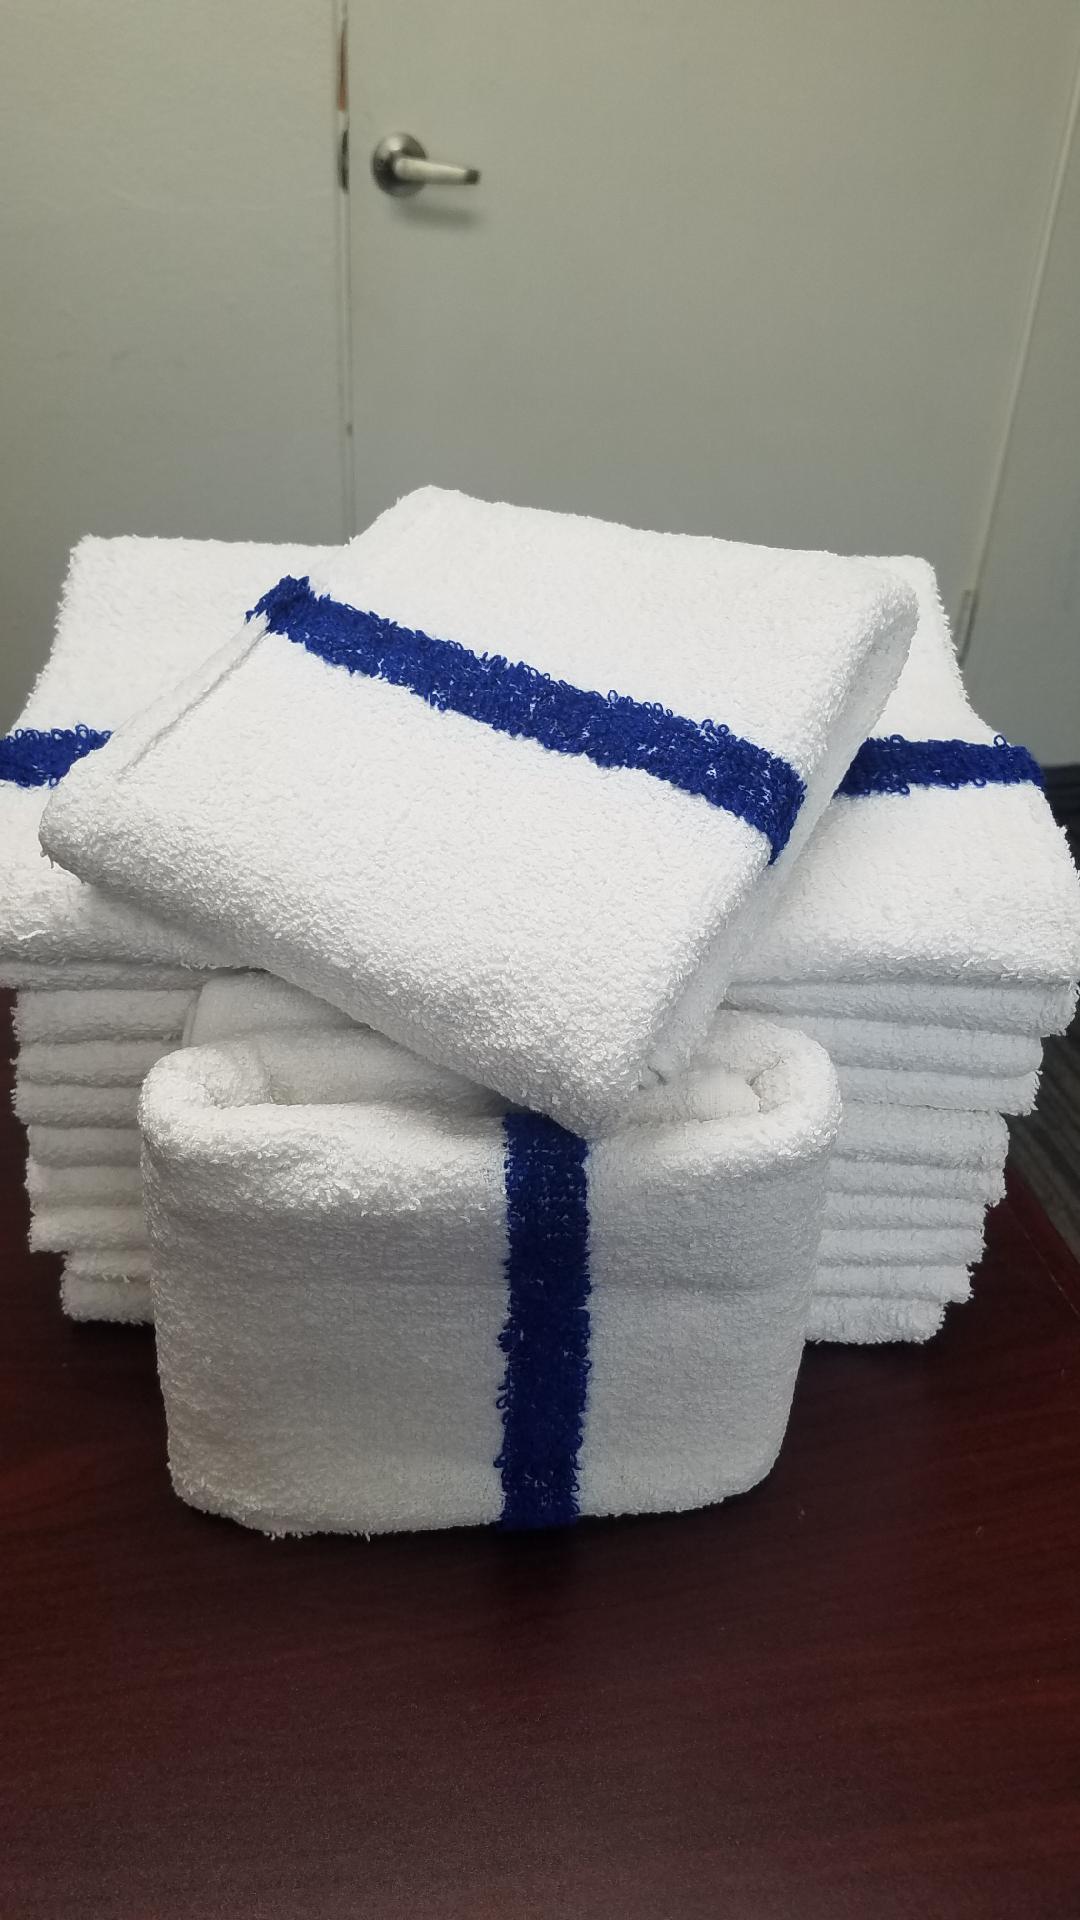 Resort Striped Pool Towel, Navy - Standard Textile Home